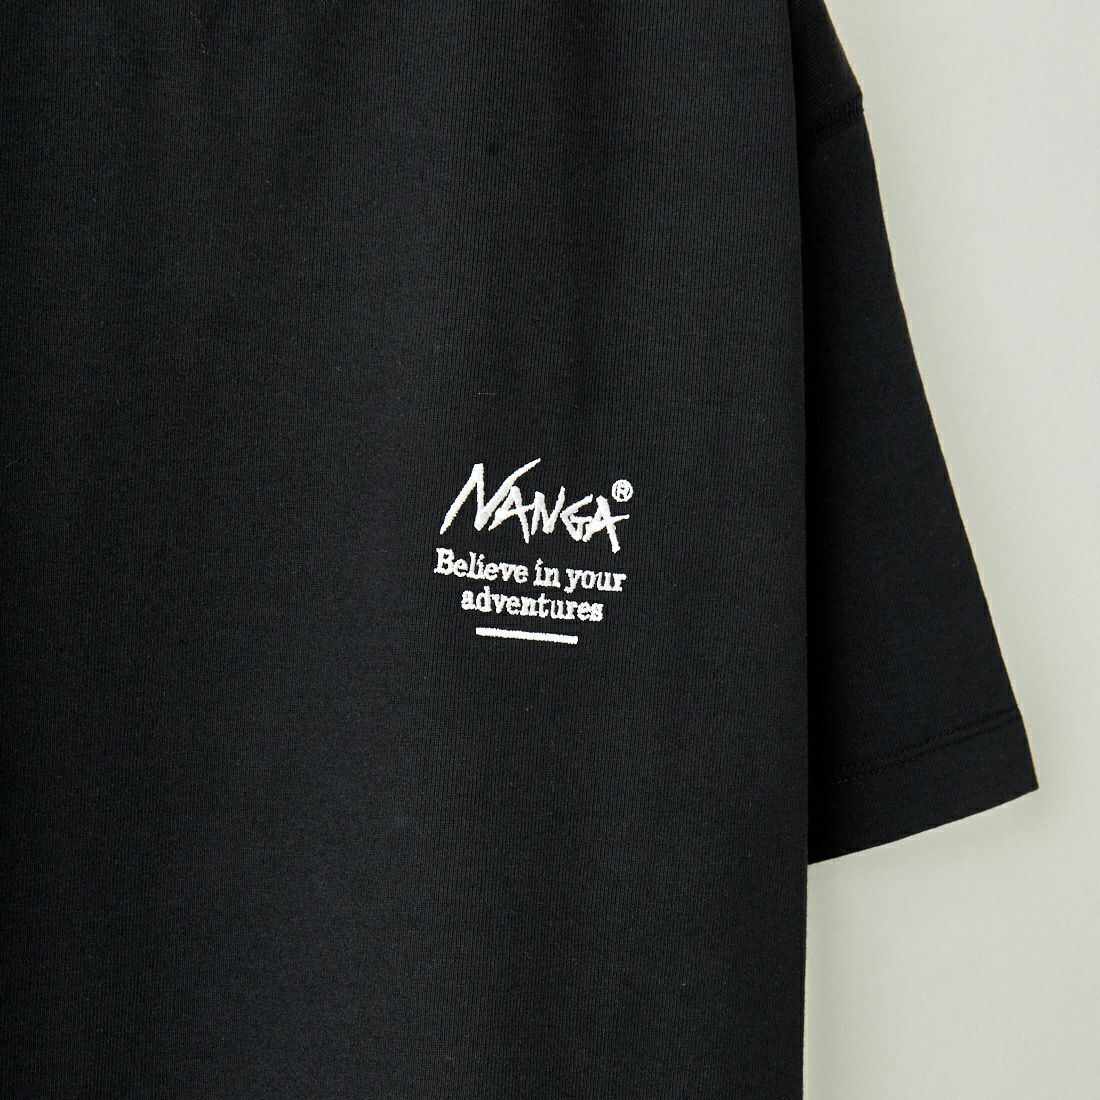 JEANSFACTORY × NANGA [ジーンズファクトリー × ナンガ] 別注 ブランドボックスロゴ バックプリントTシャツ [NW24SS-JF1] BLACK